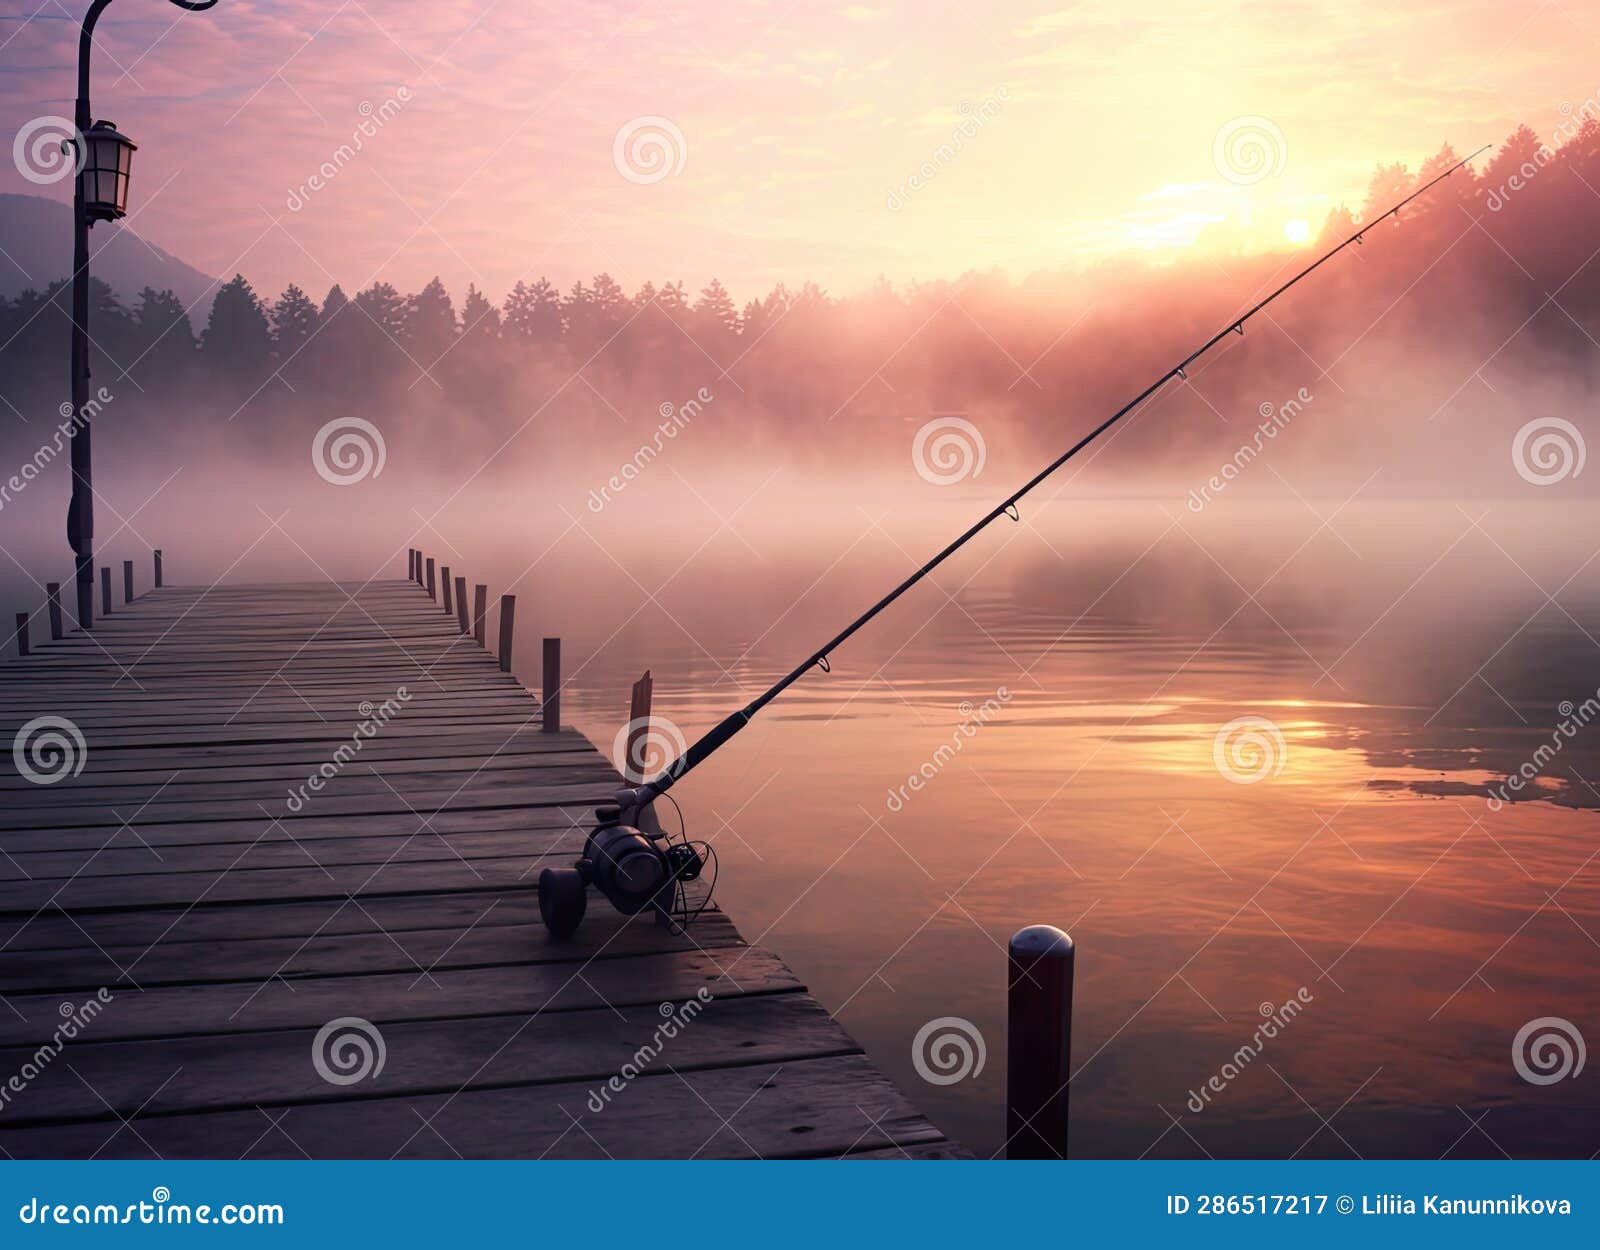 https://thumbs.dreamstime.com/z/fishing-rod-spinning-reel-background-pier-river-bank-sunrise-fog-against-backdrop-lake-misty-morning-wild-nature-concept-286517217.jpg